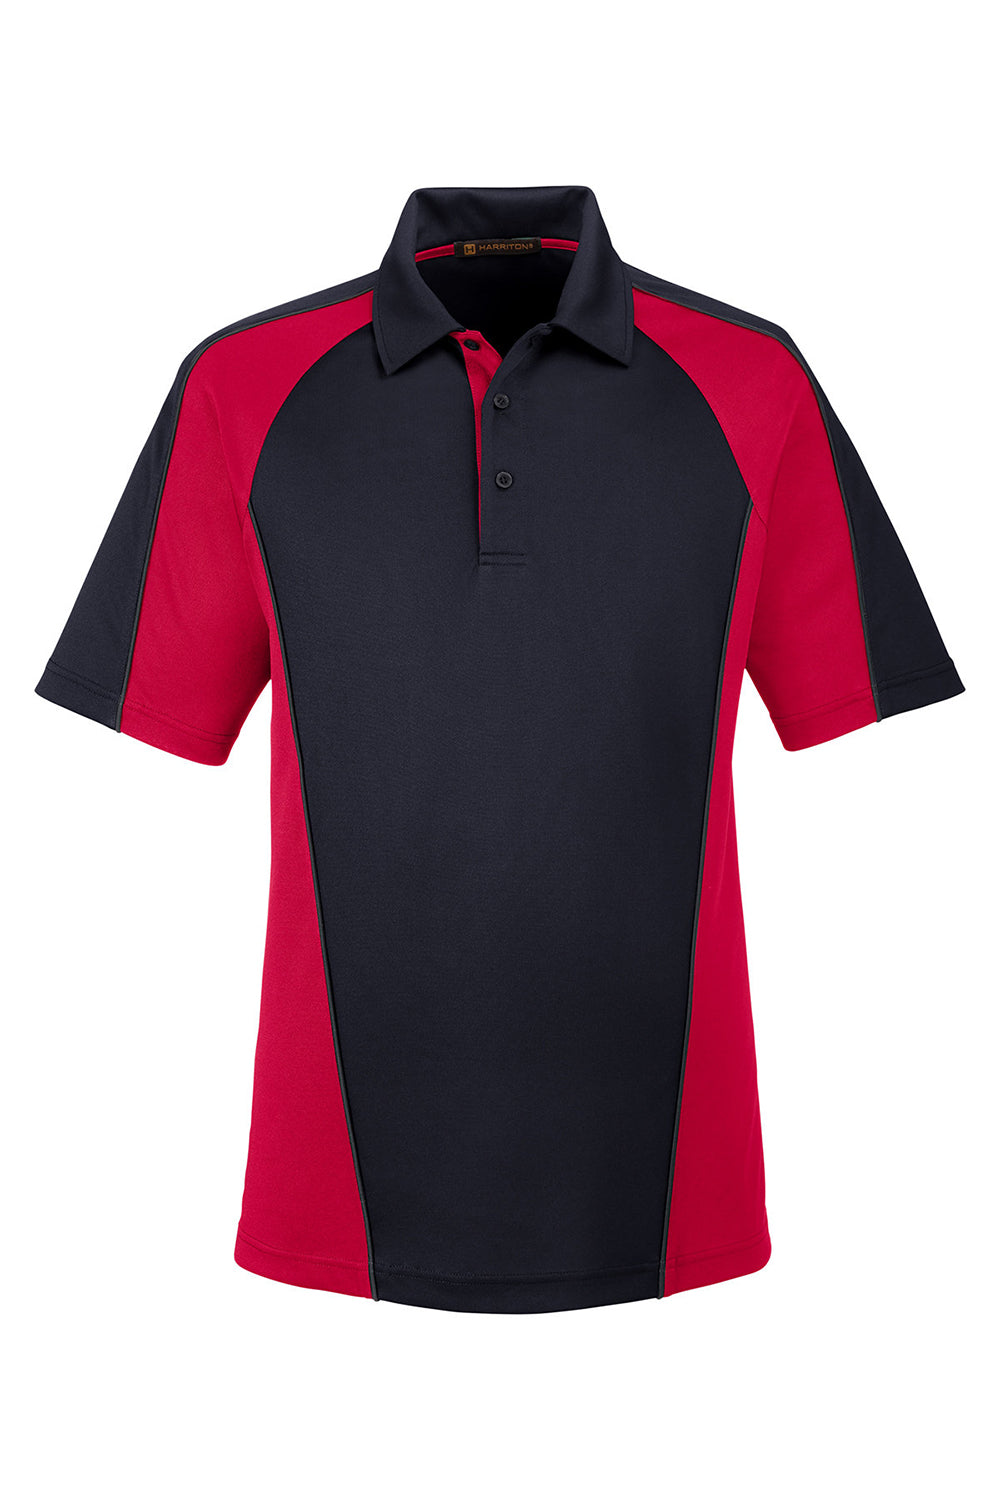 Harriton M385 Mens Advantage Performance Moisture Wicking Colorblock Short Sleeve Polo Shirt Black/Red Flat Front